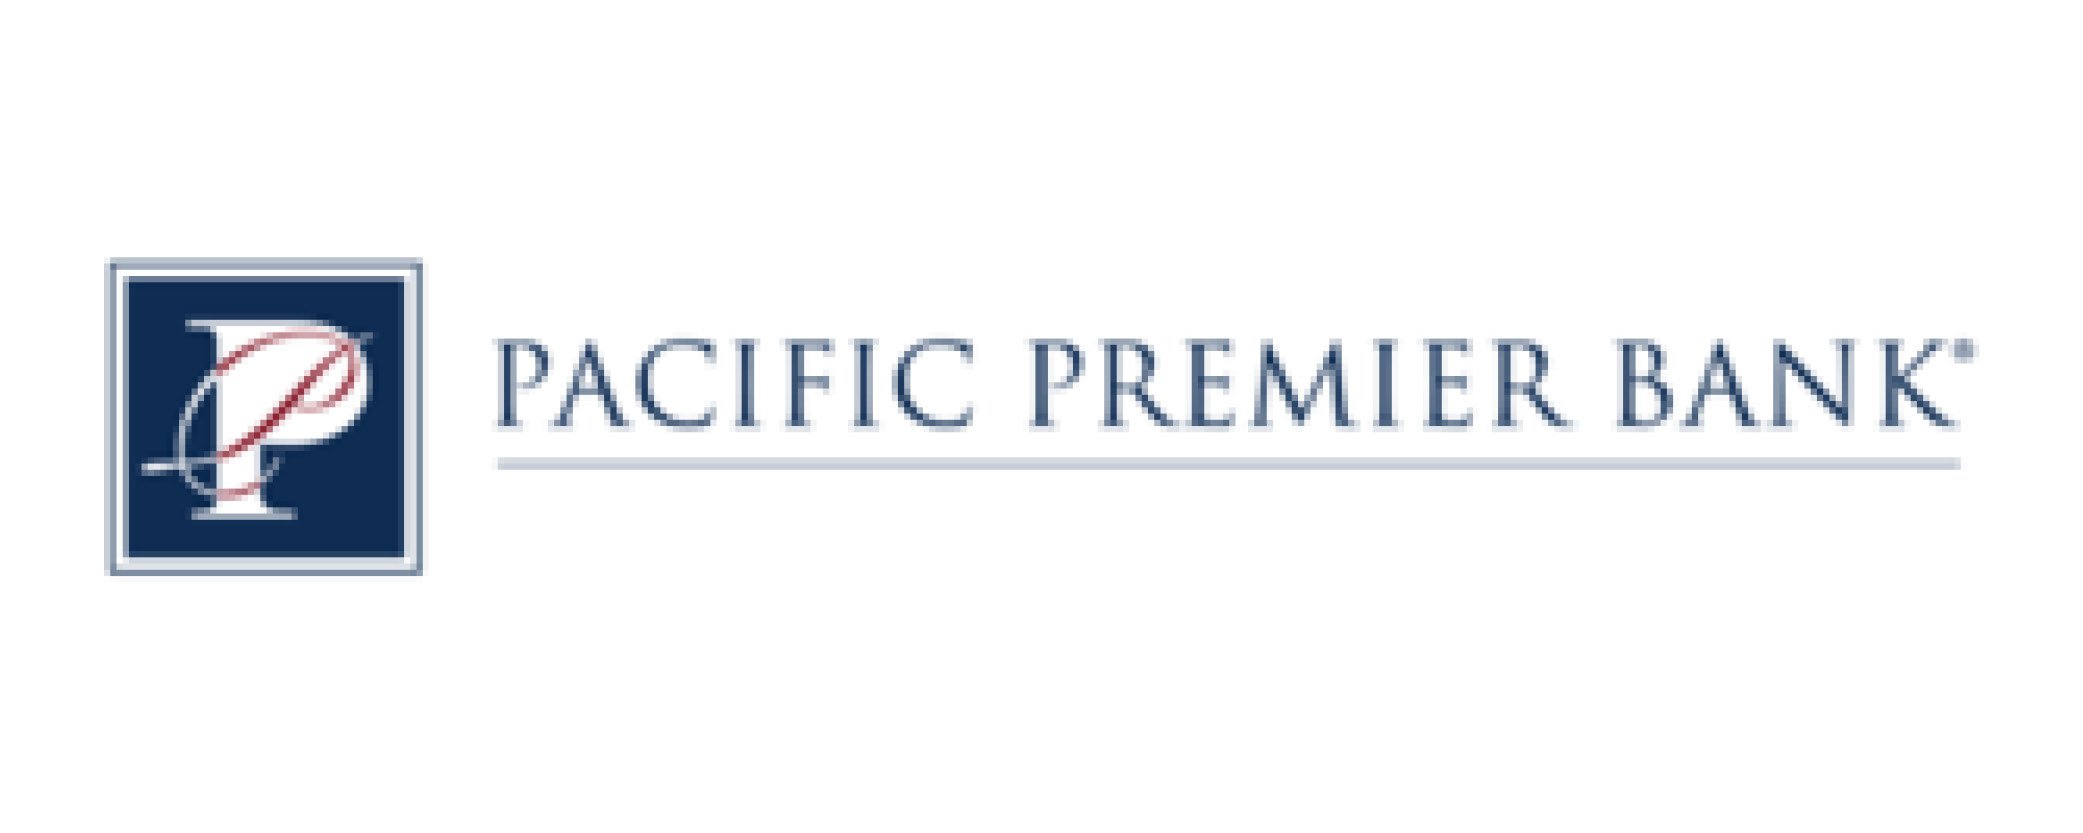 Pacific Premiere Bank.jpg